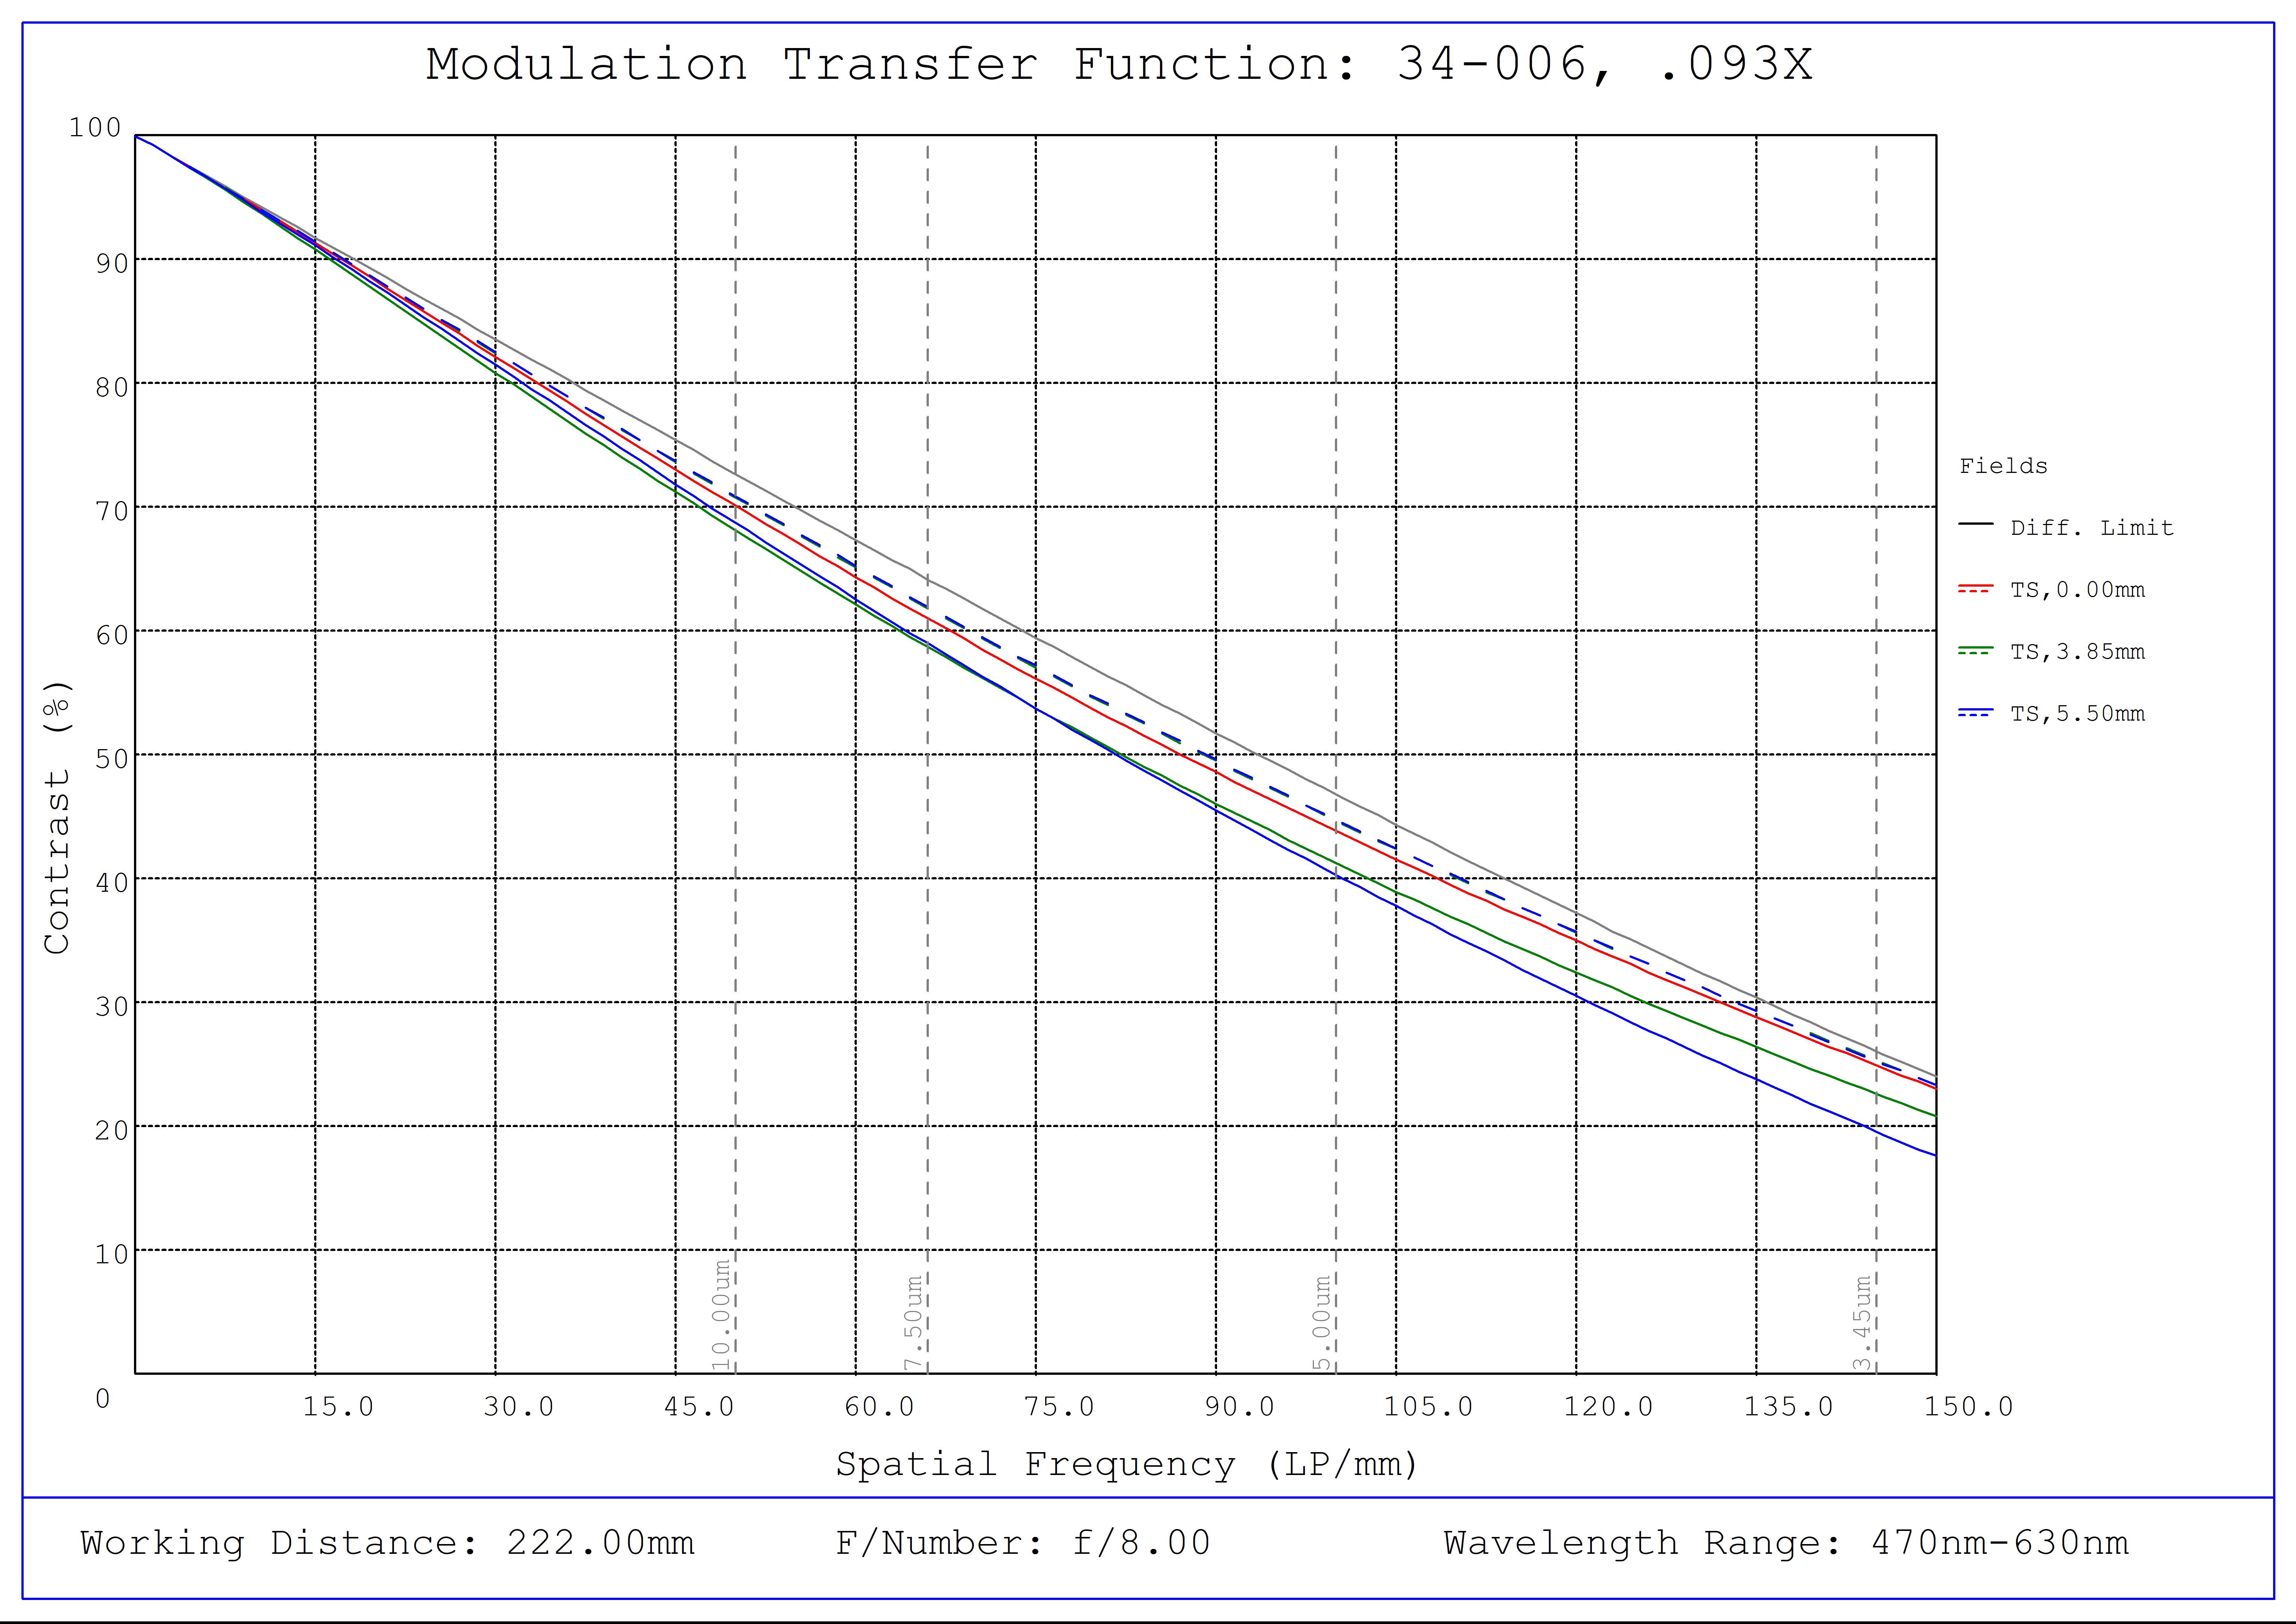 #34-006, 0.093X, 2/3" C-Mount TitanTL® Telecentric Lens, Modulated Transfer Function (MTF) Plot, 222mm Working Distance, f8